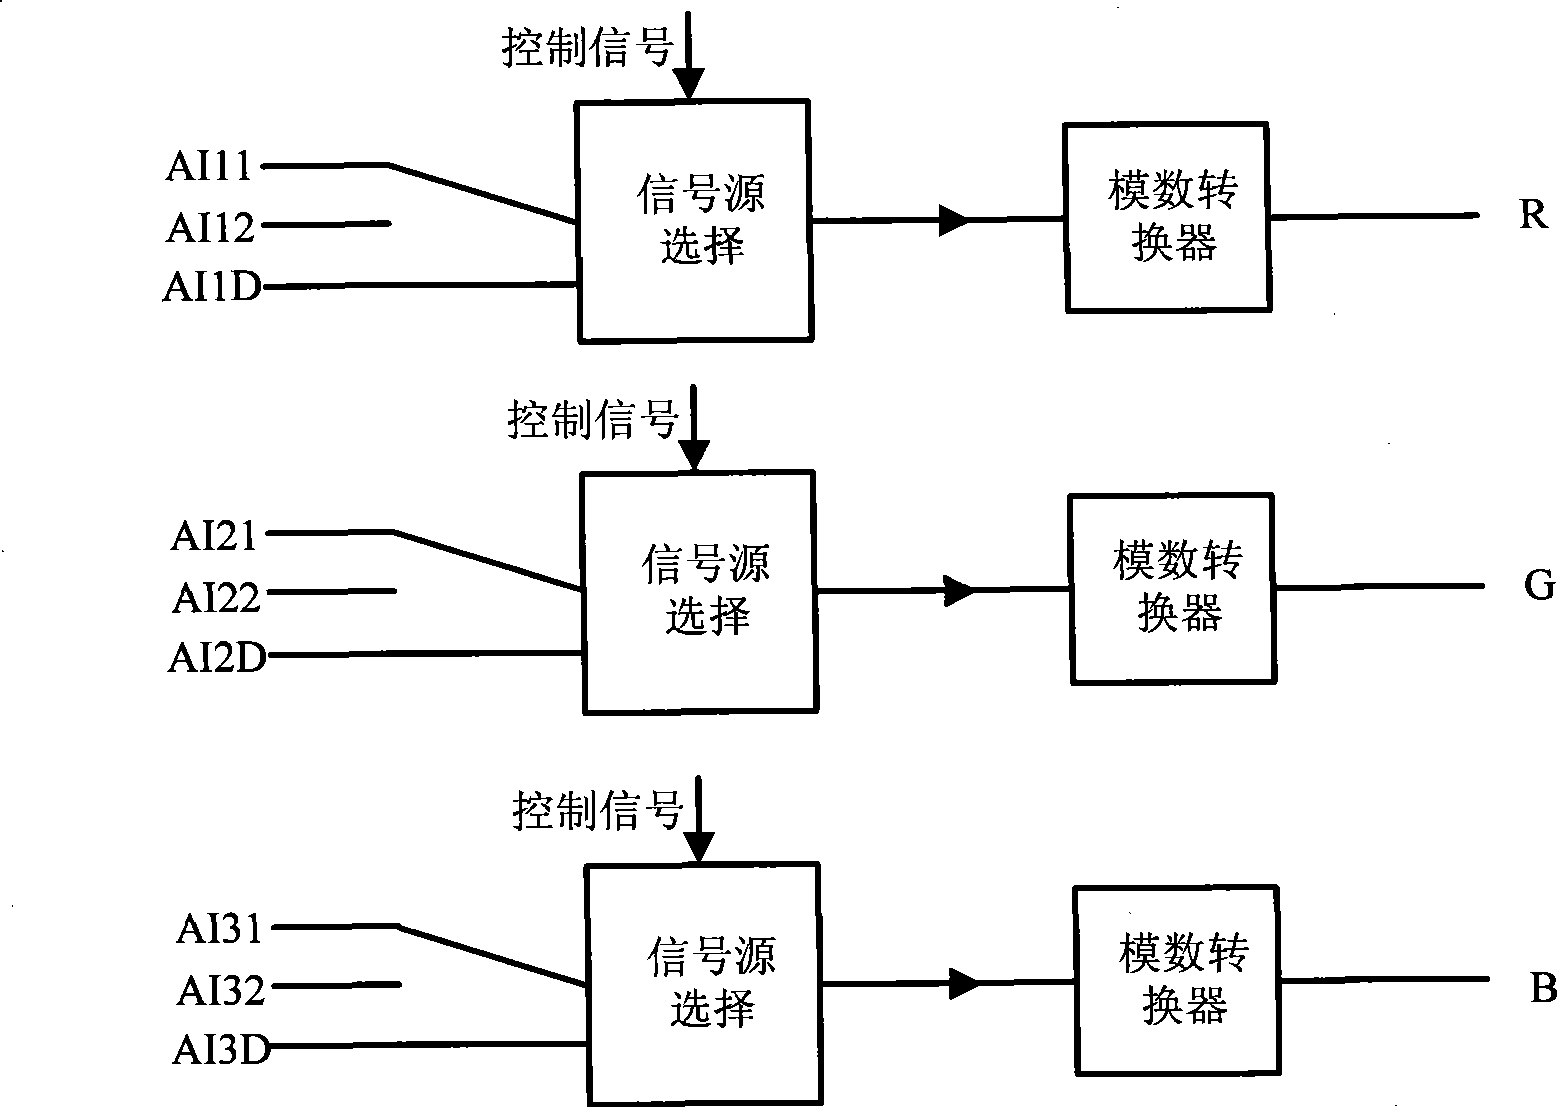 Video input decoding chip